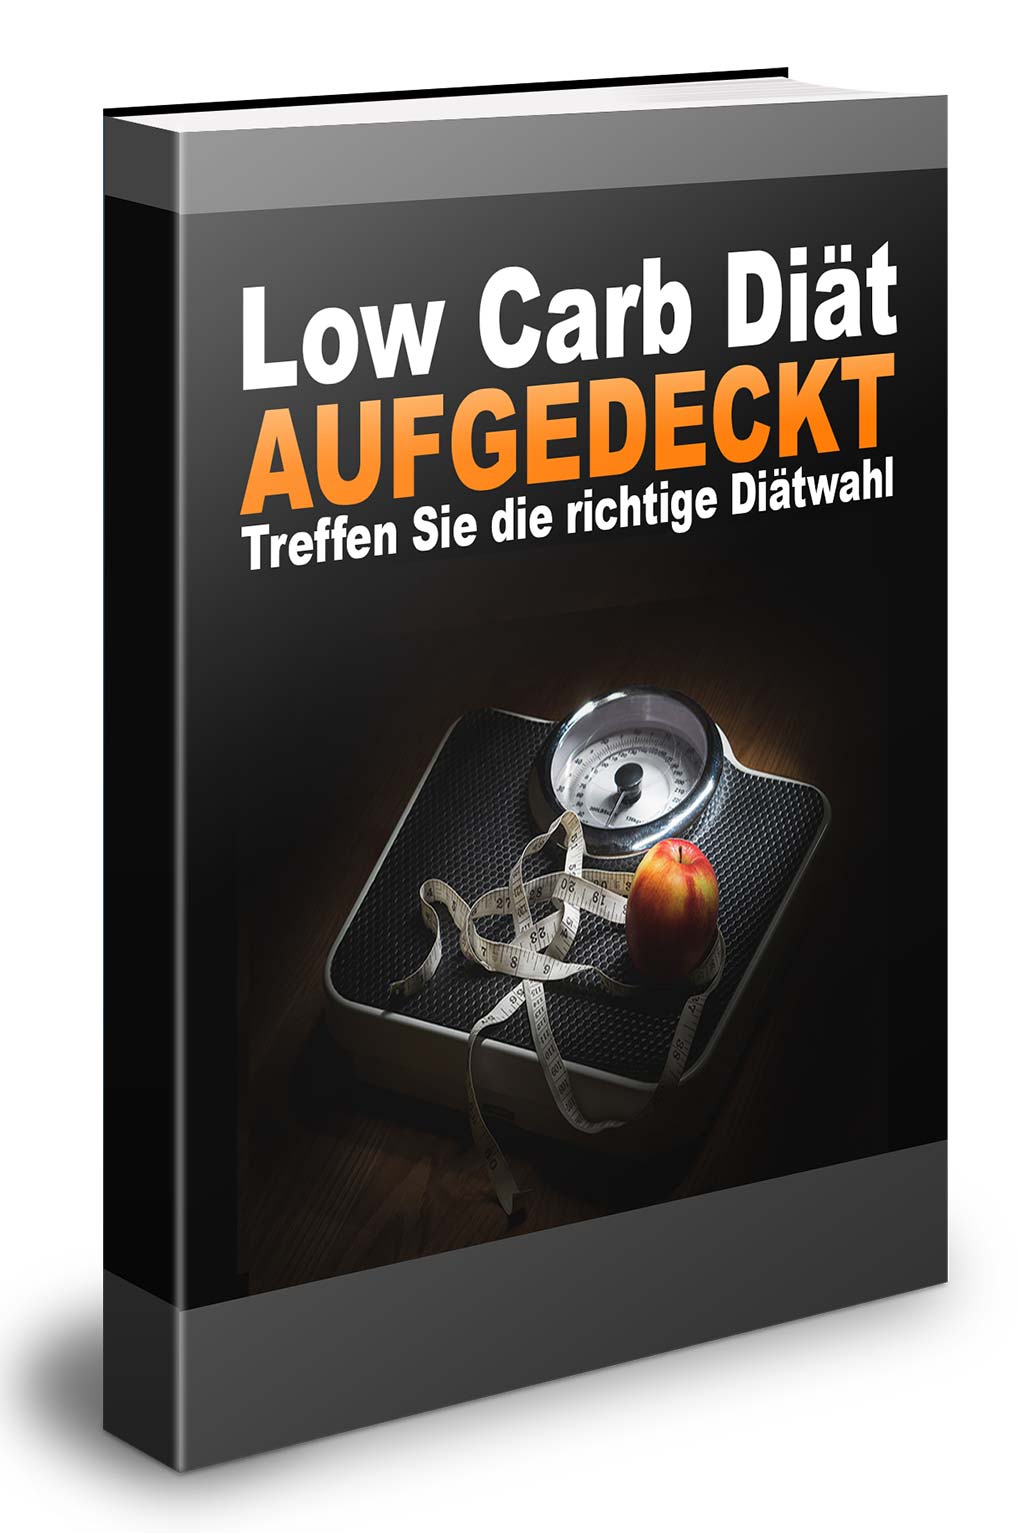 Low Carb Diät aufgedeckt